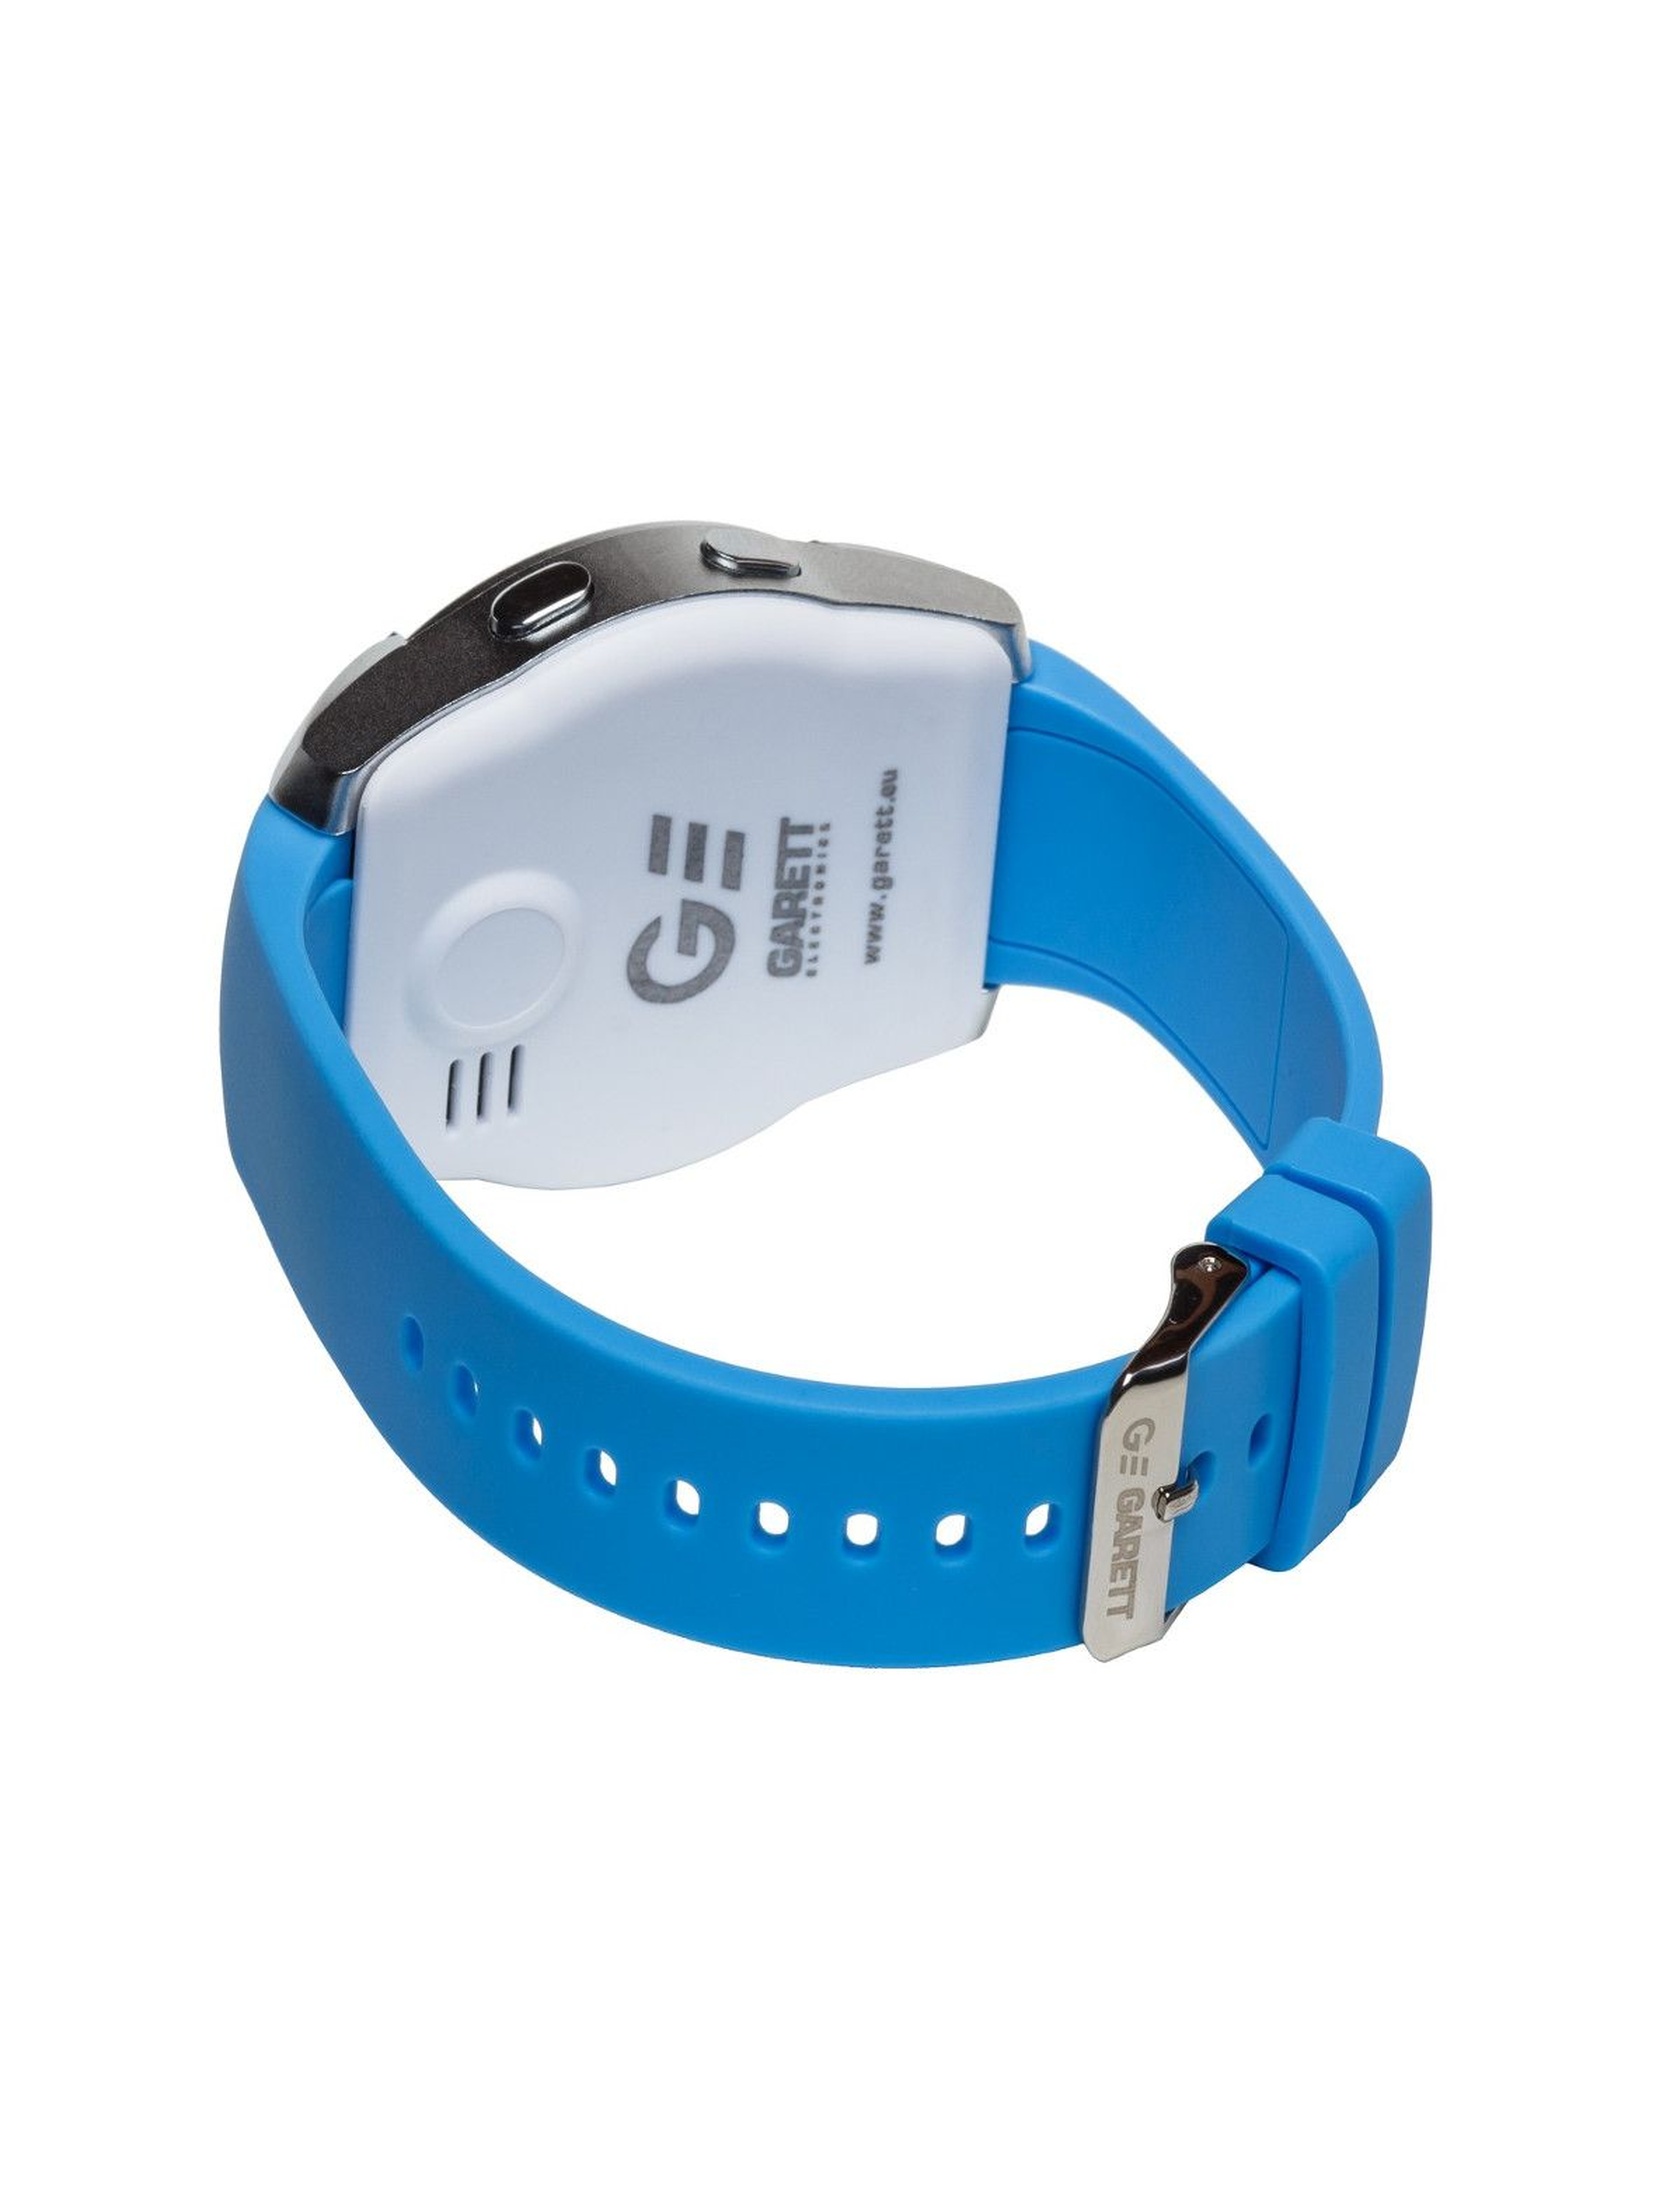 Smartwatch Garett G11 niebiesko-srebrny